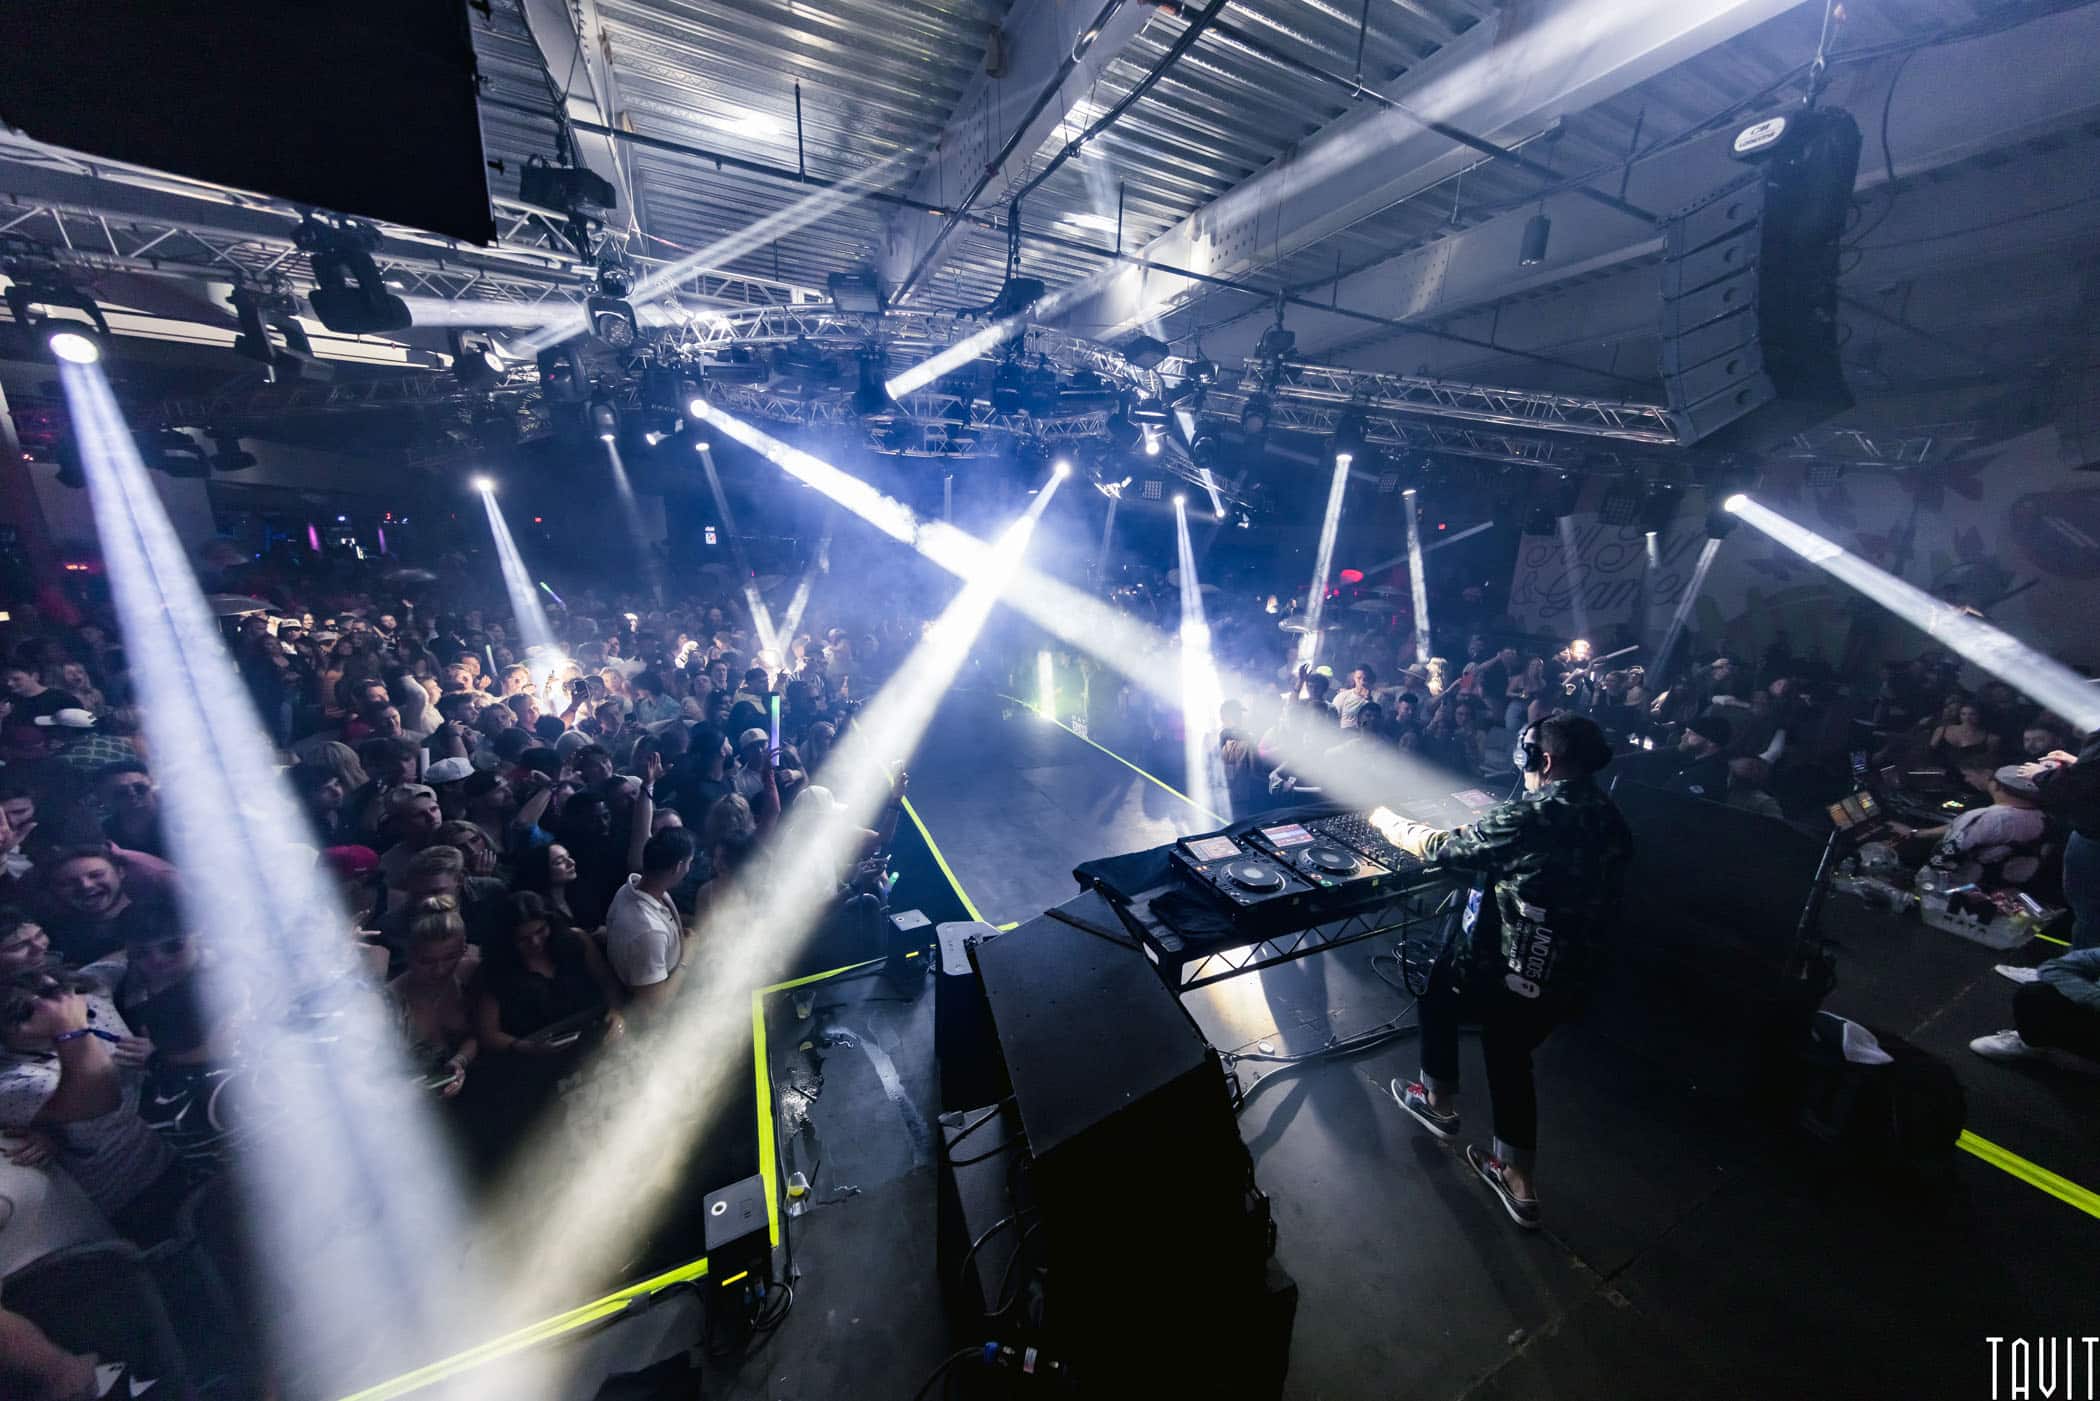 DJ on catwalk stage with lights